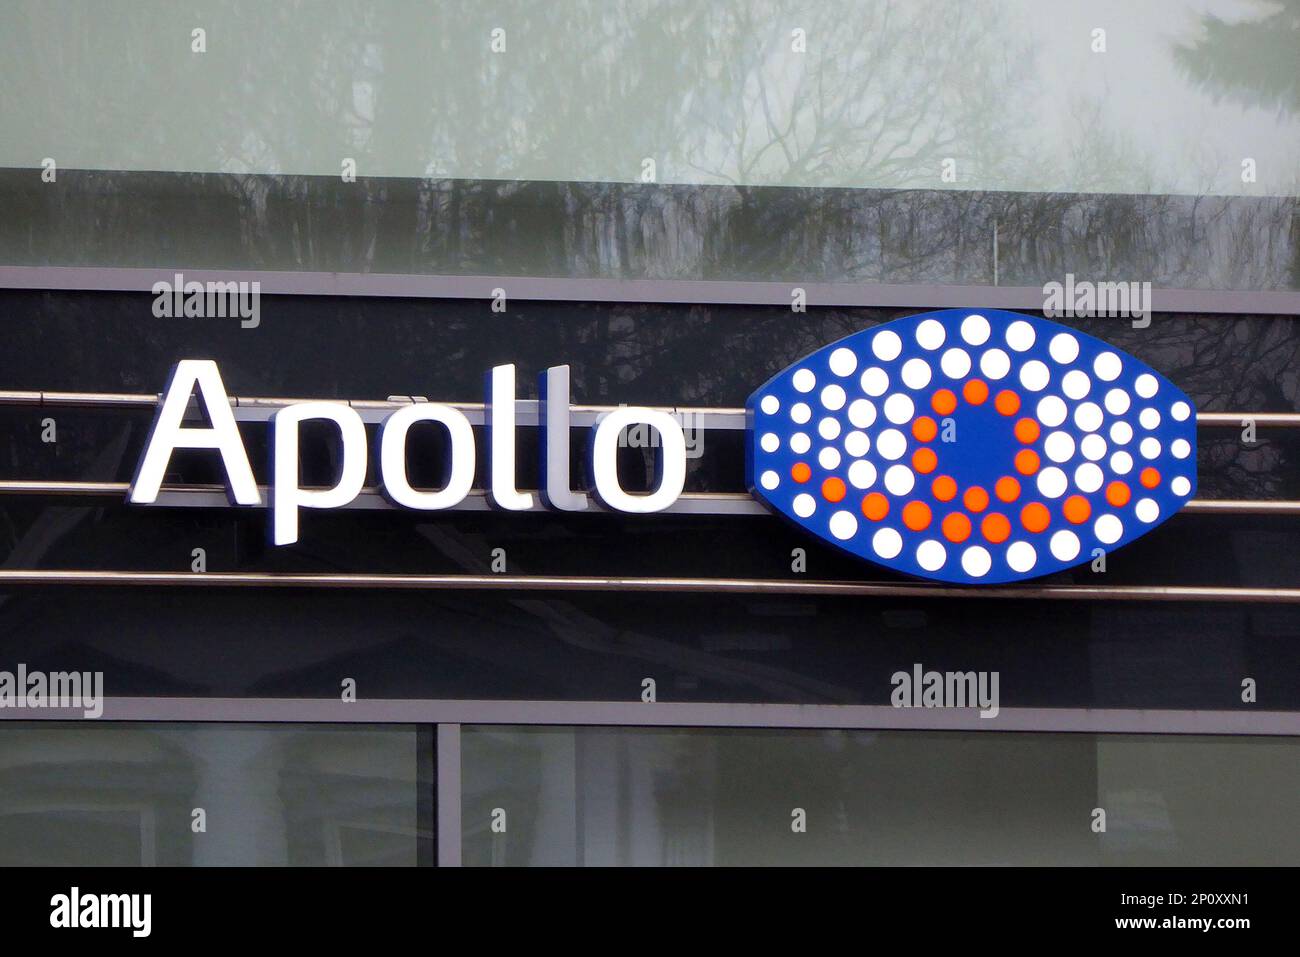 Apollo Optik Kette / Geschaft / Augenoptik-Unternehmen / Laden / logo / Symbol Banque D'Images